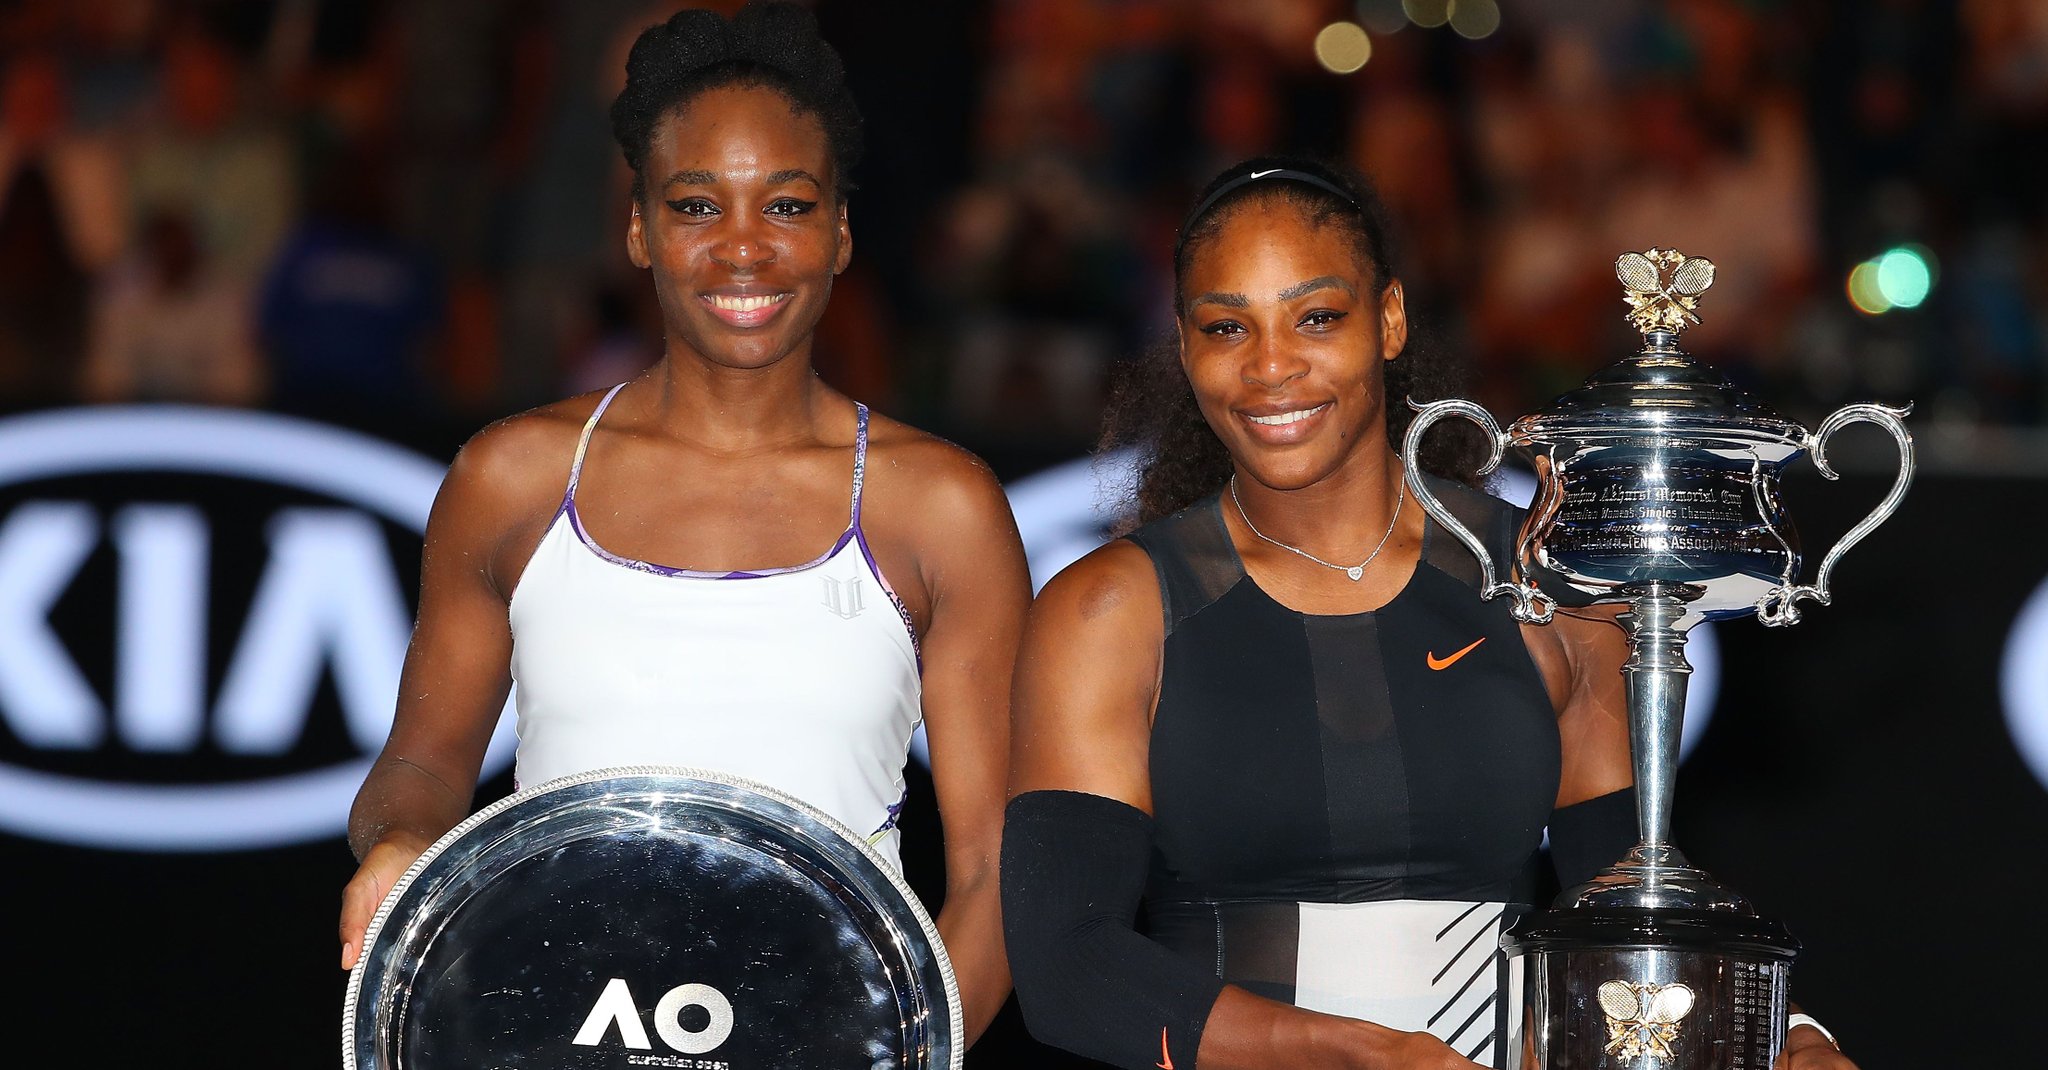 Fantastic Venus And Serena Williams Cup Still Hd Desktop Backgroud Pictures